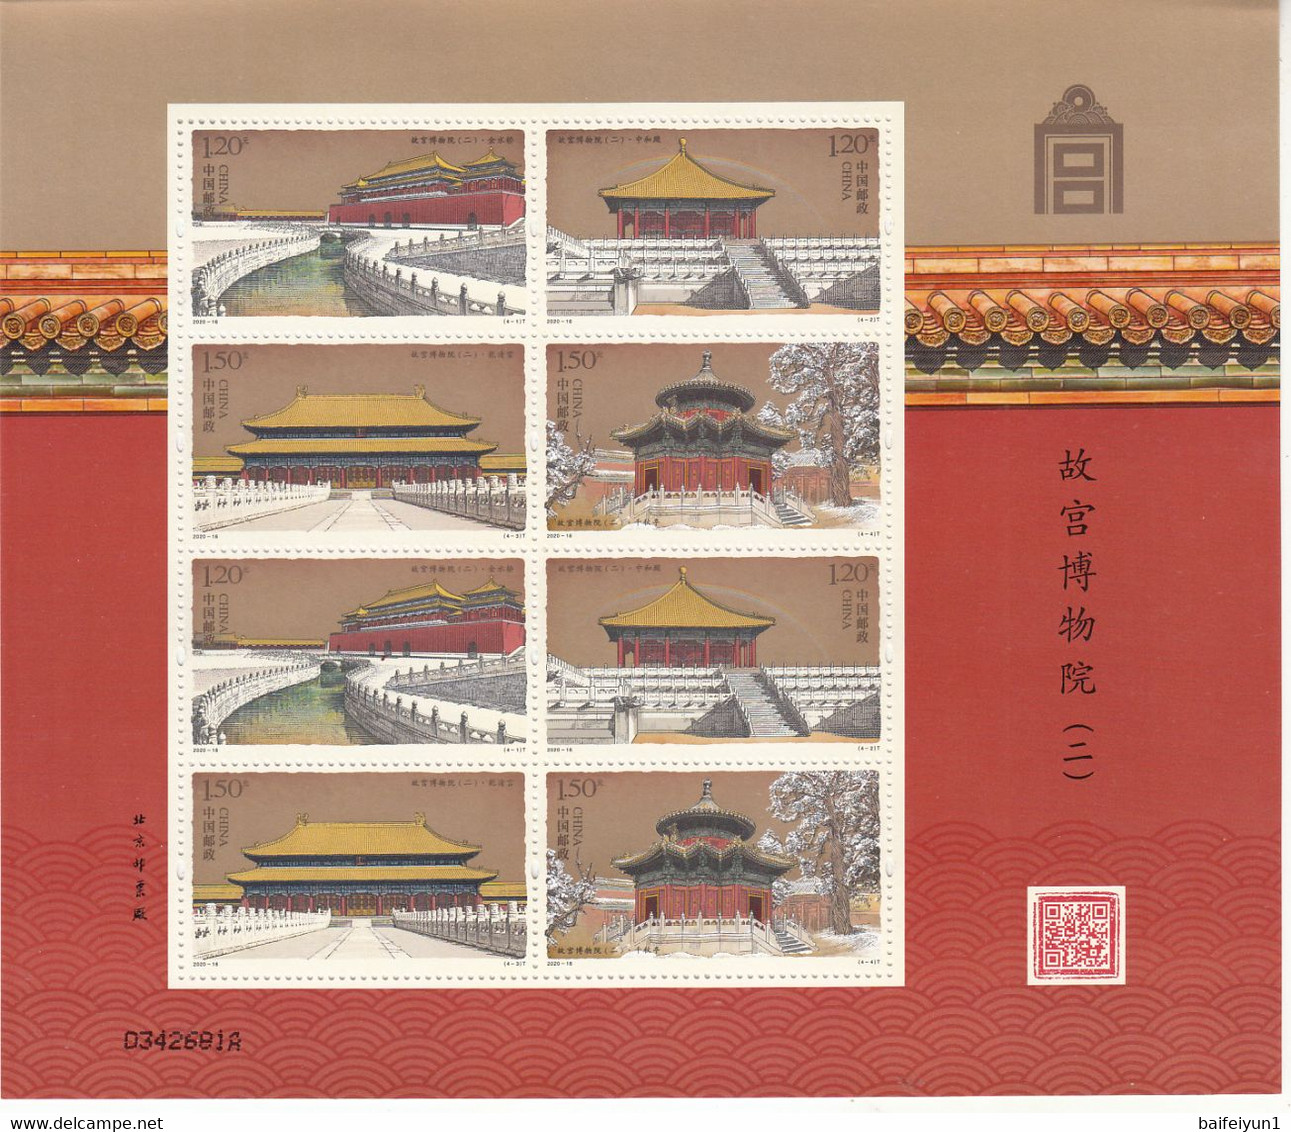 CHINA 2020 Whole Year of Rat  sheetlet Stamp Year set (8v)